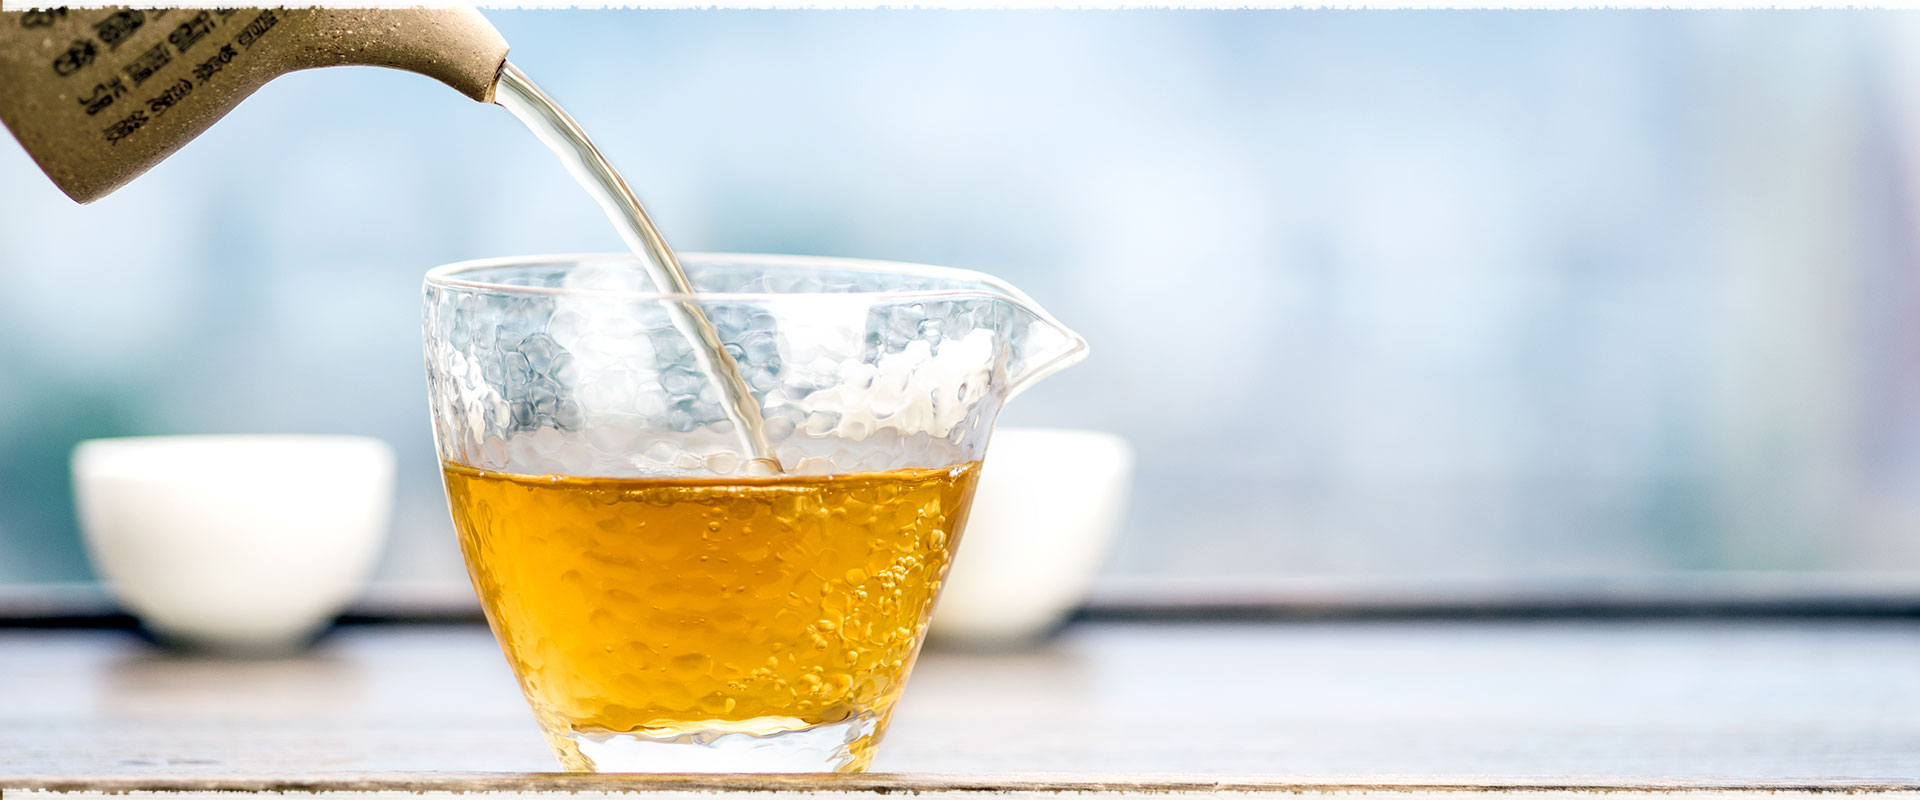 How to loosen and pry Pu-erh Tea